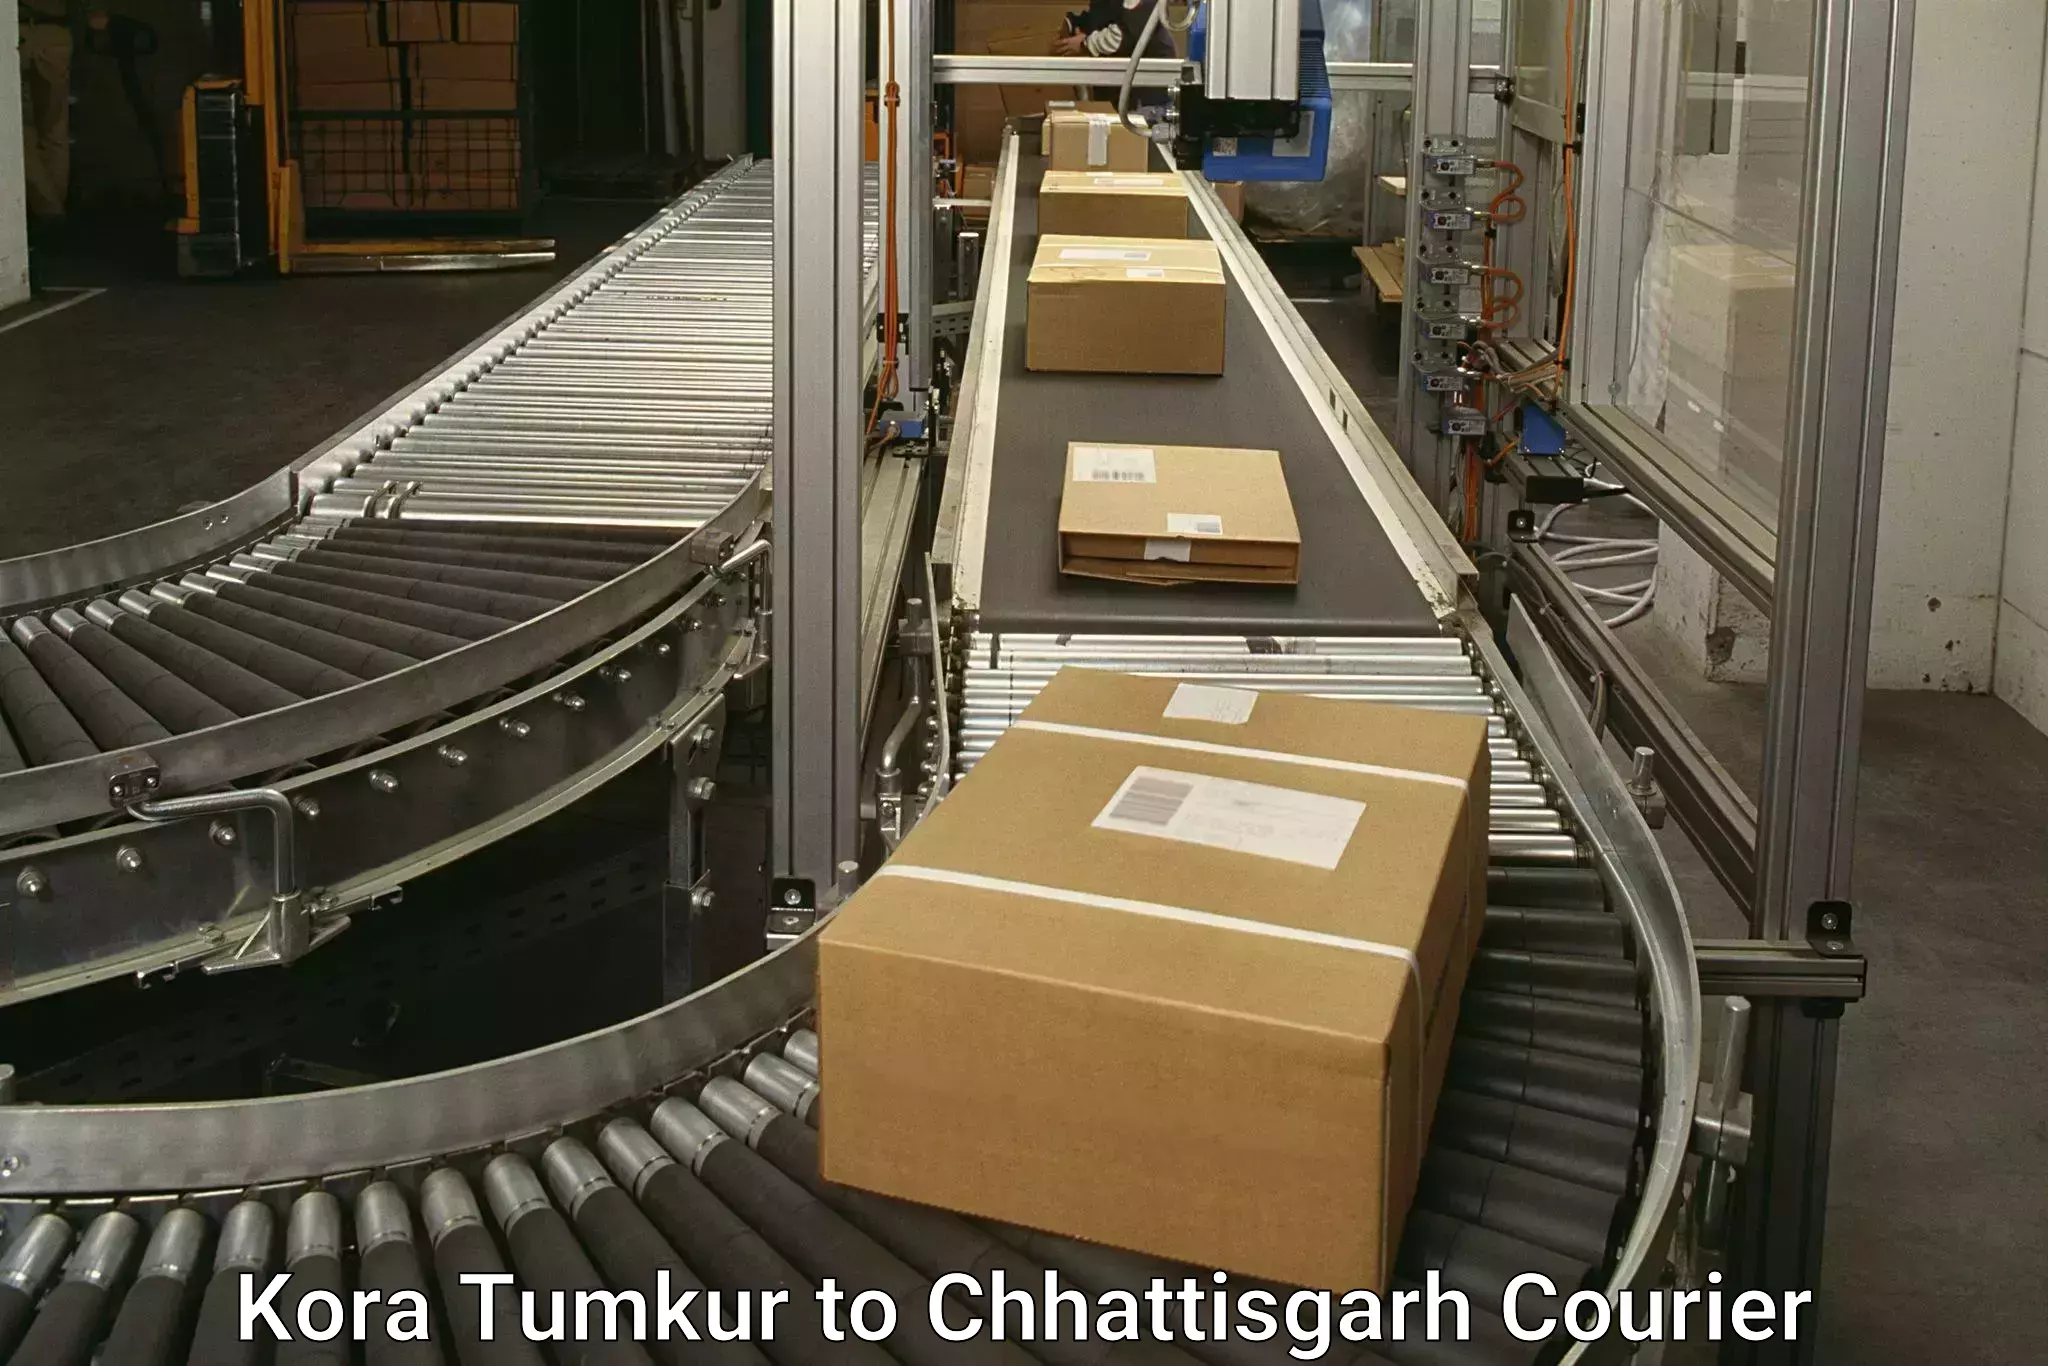 Efficient order fulfillment Kora Tumkur to Chhattisgarh